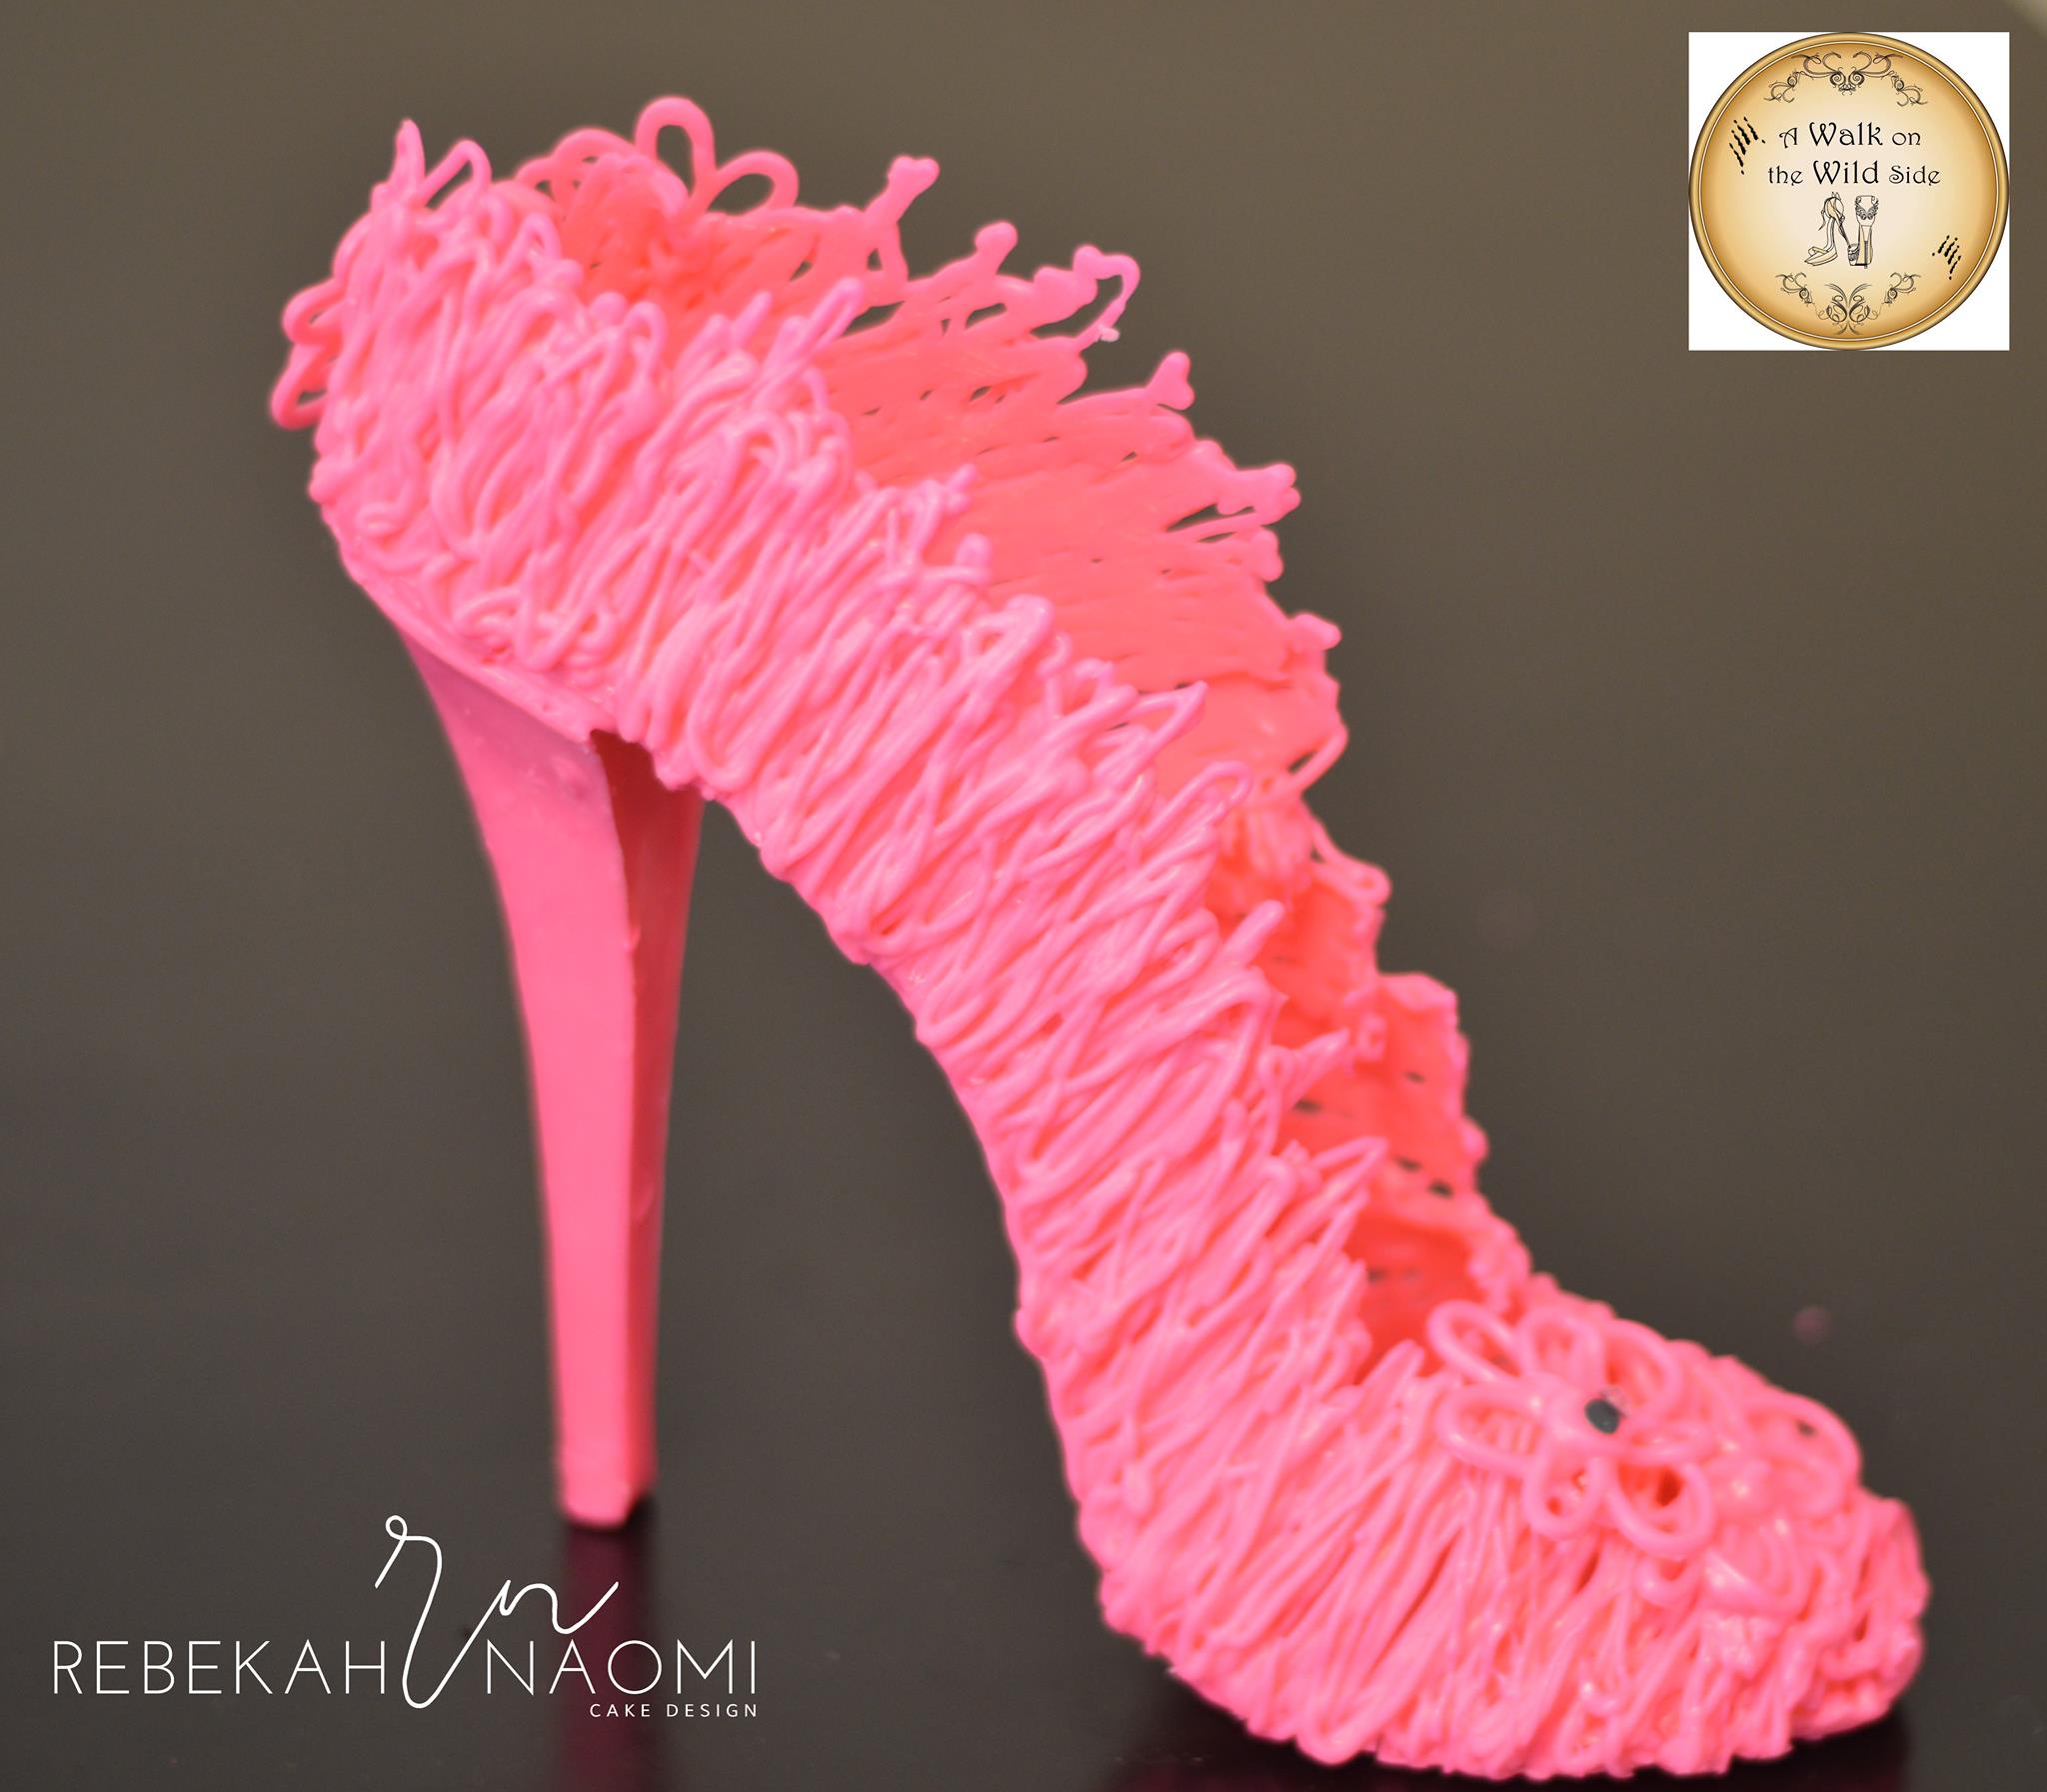  Shoe Cakes - rebekah naomi cake design